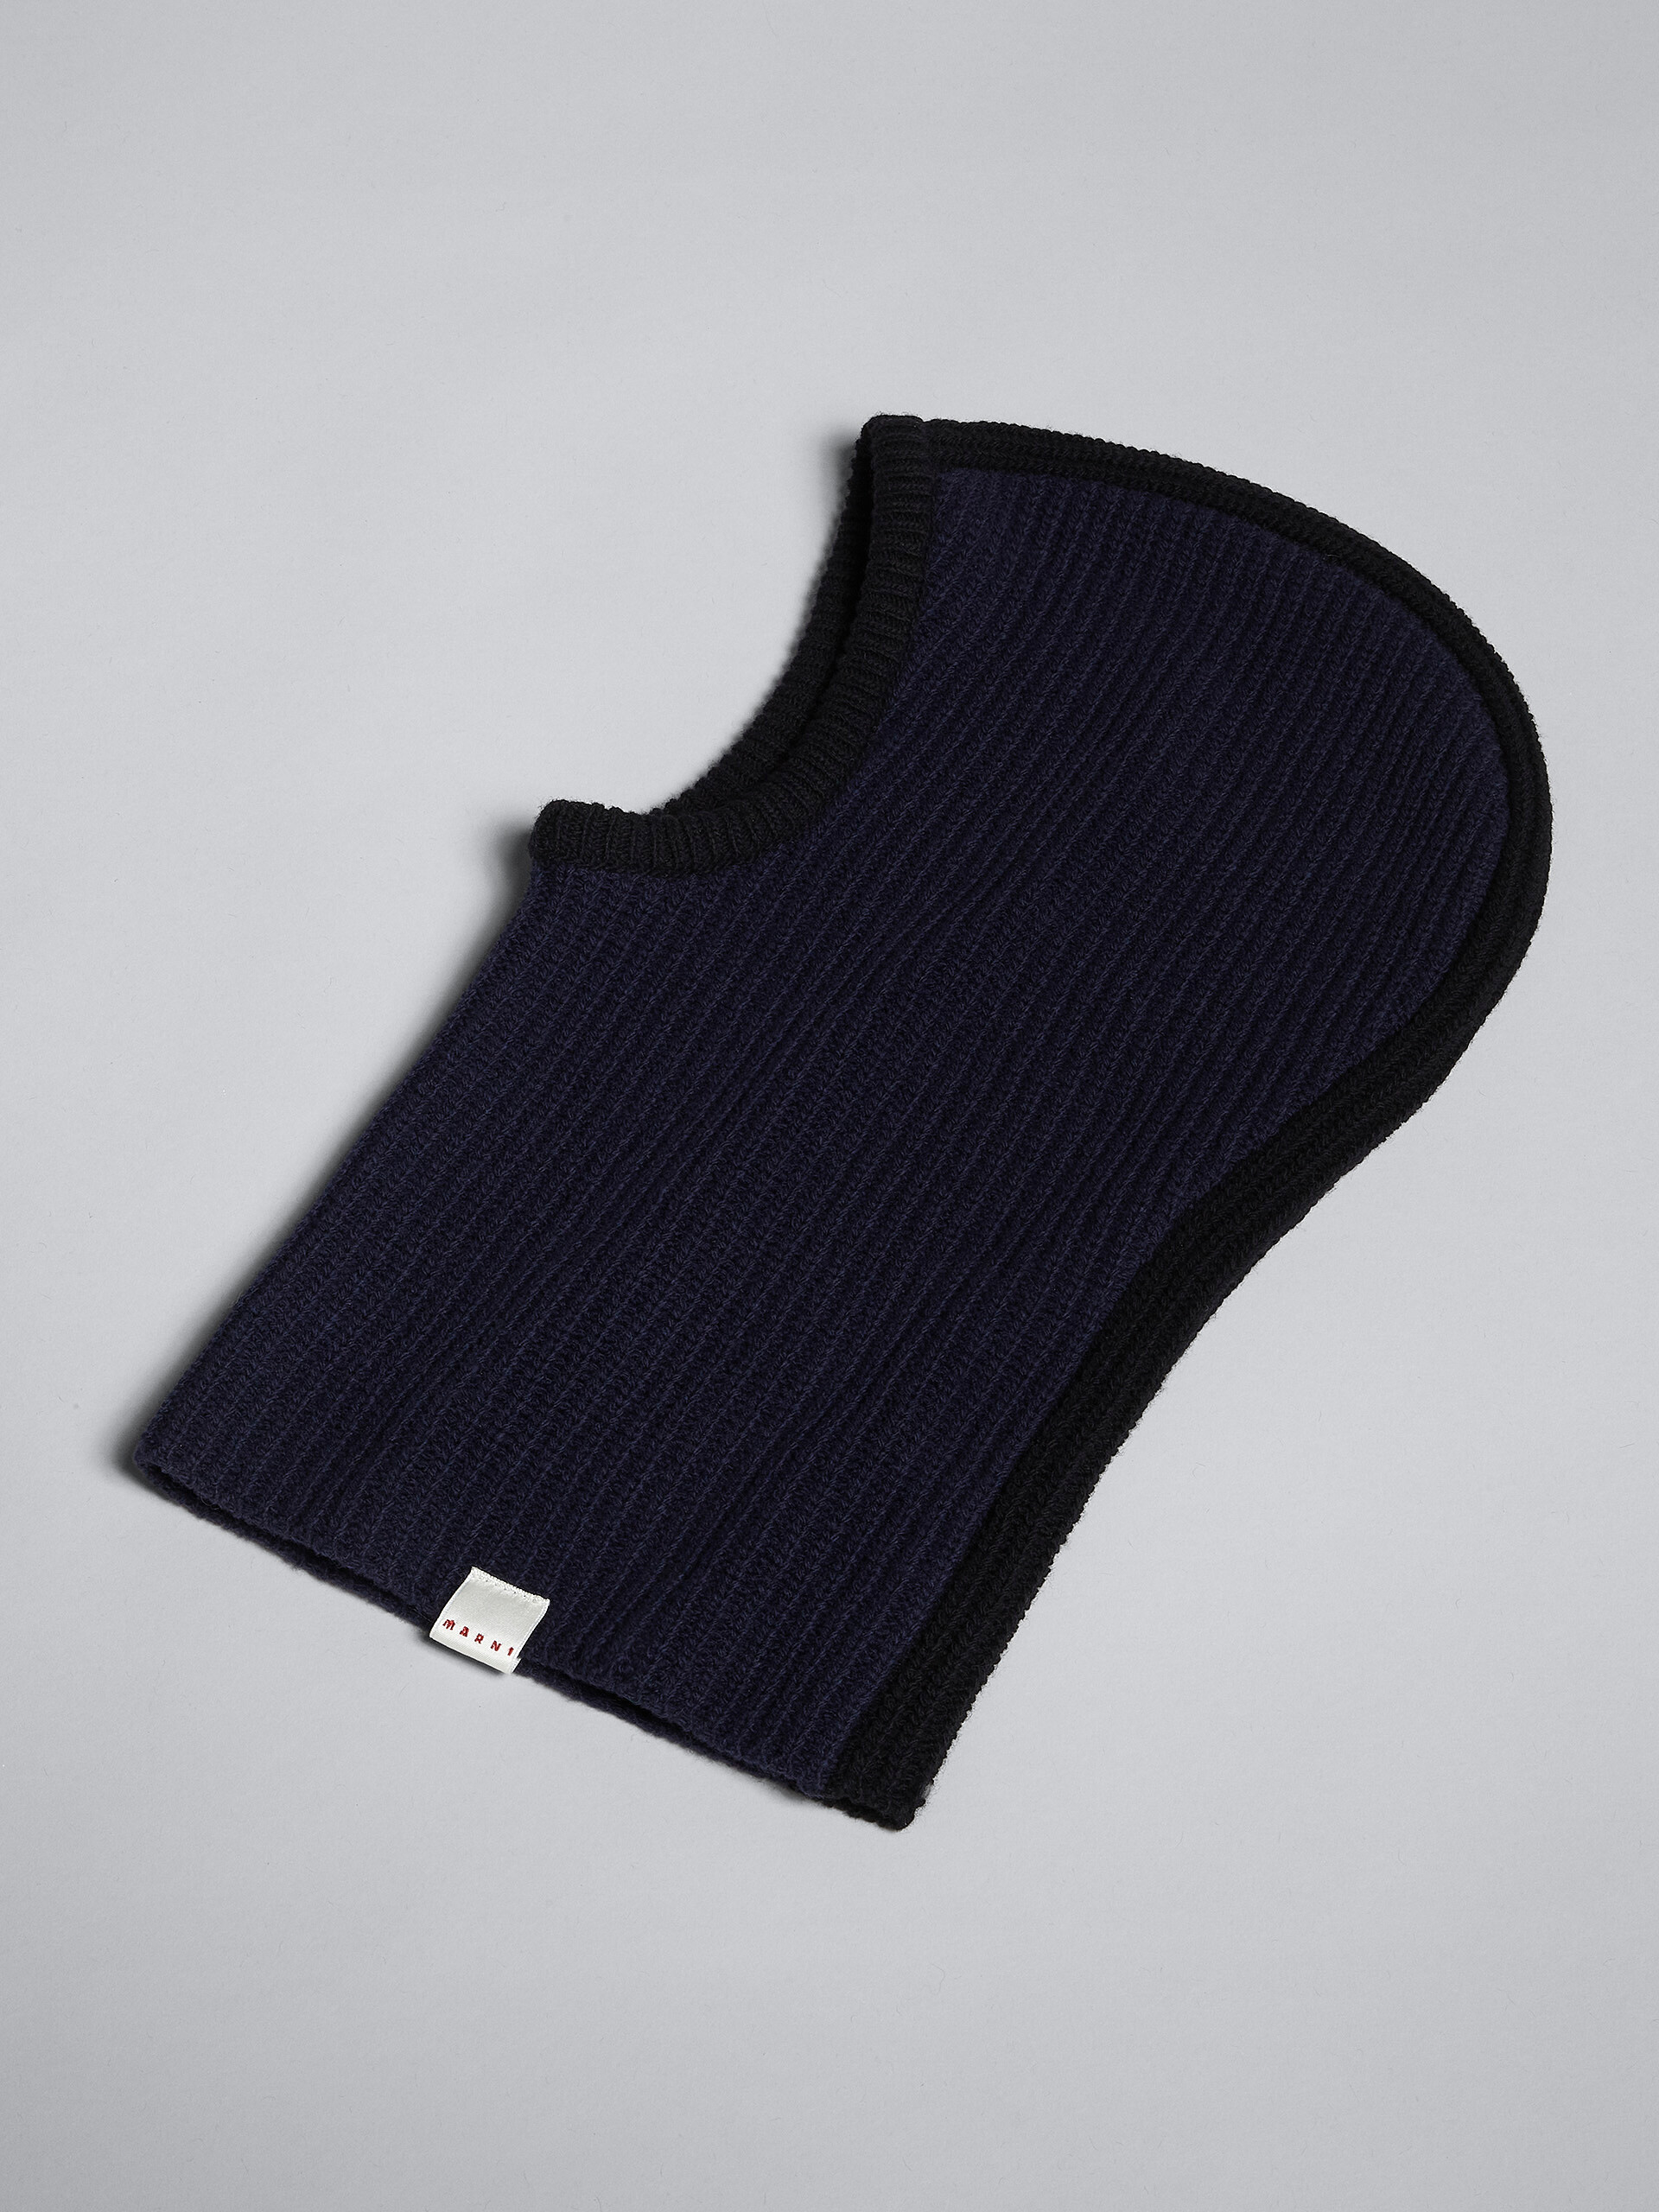 Passamontagna in lana Shetland blu - Altri accessori - Image 3